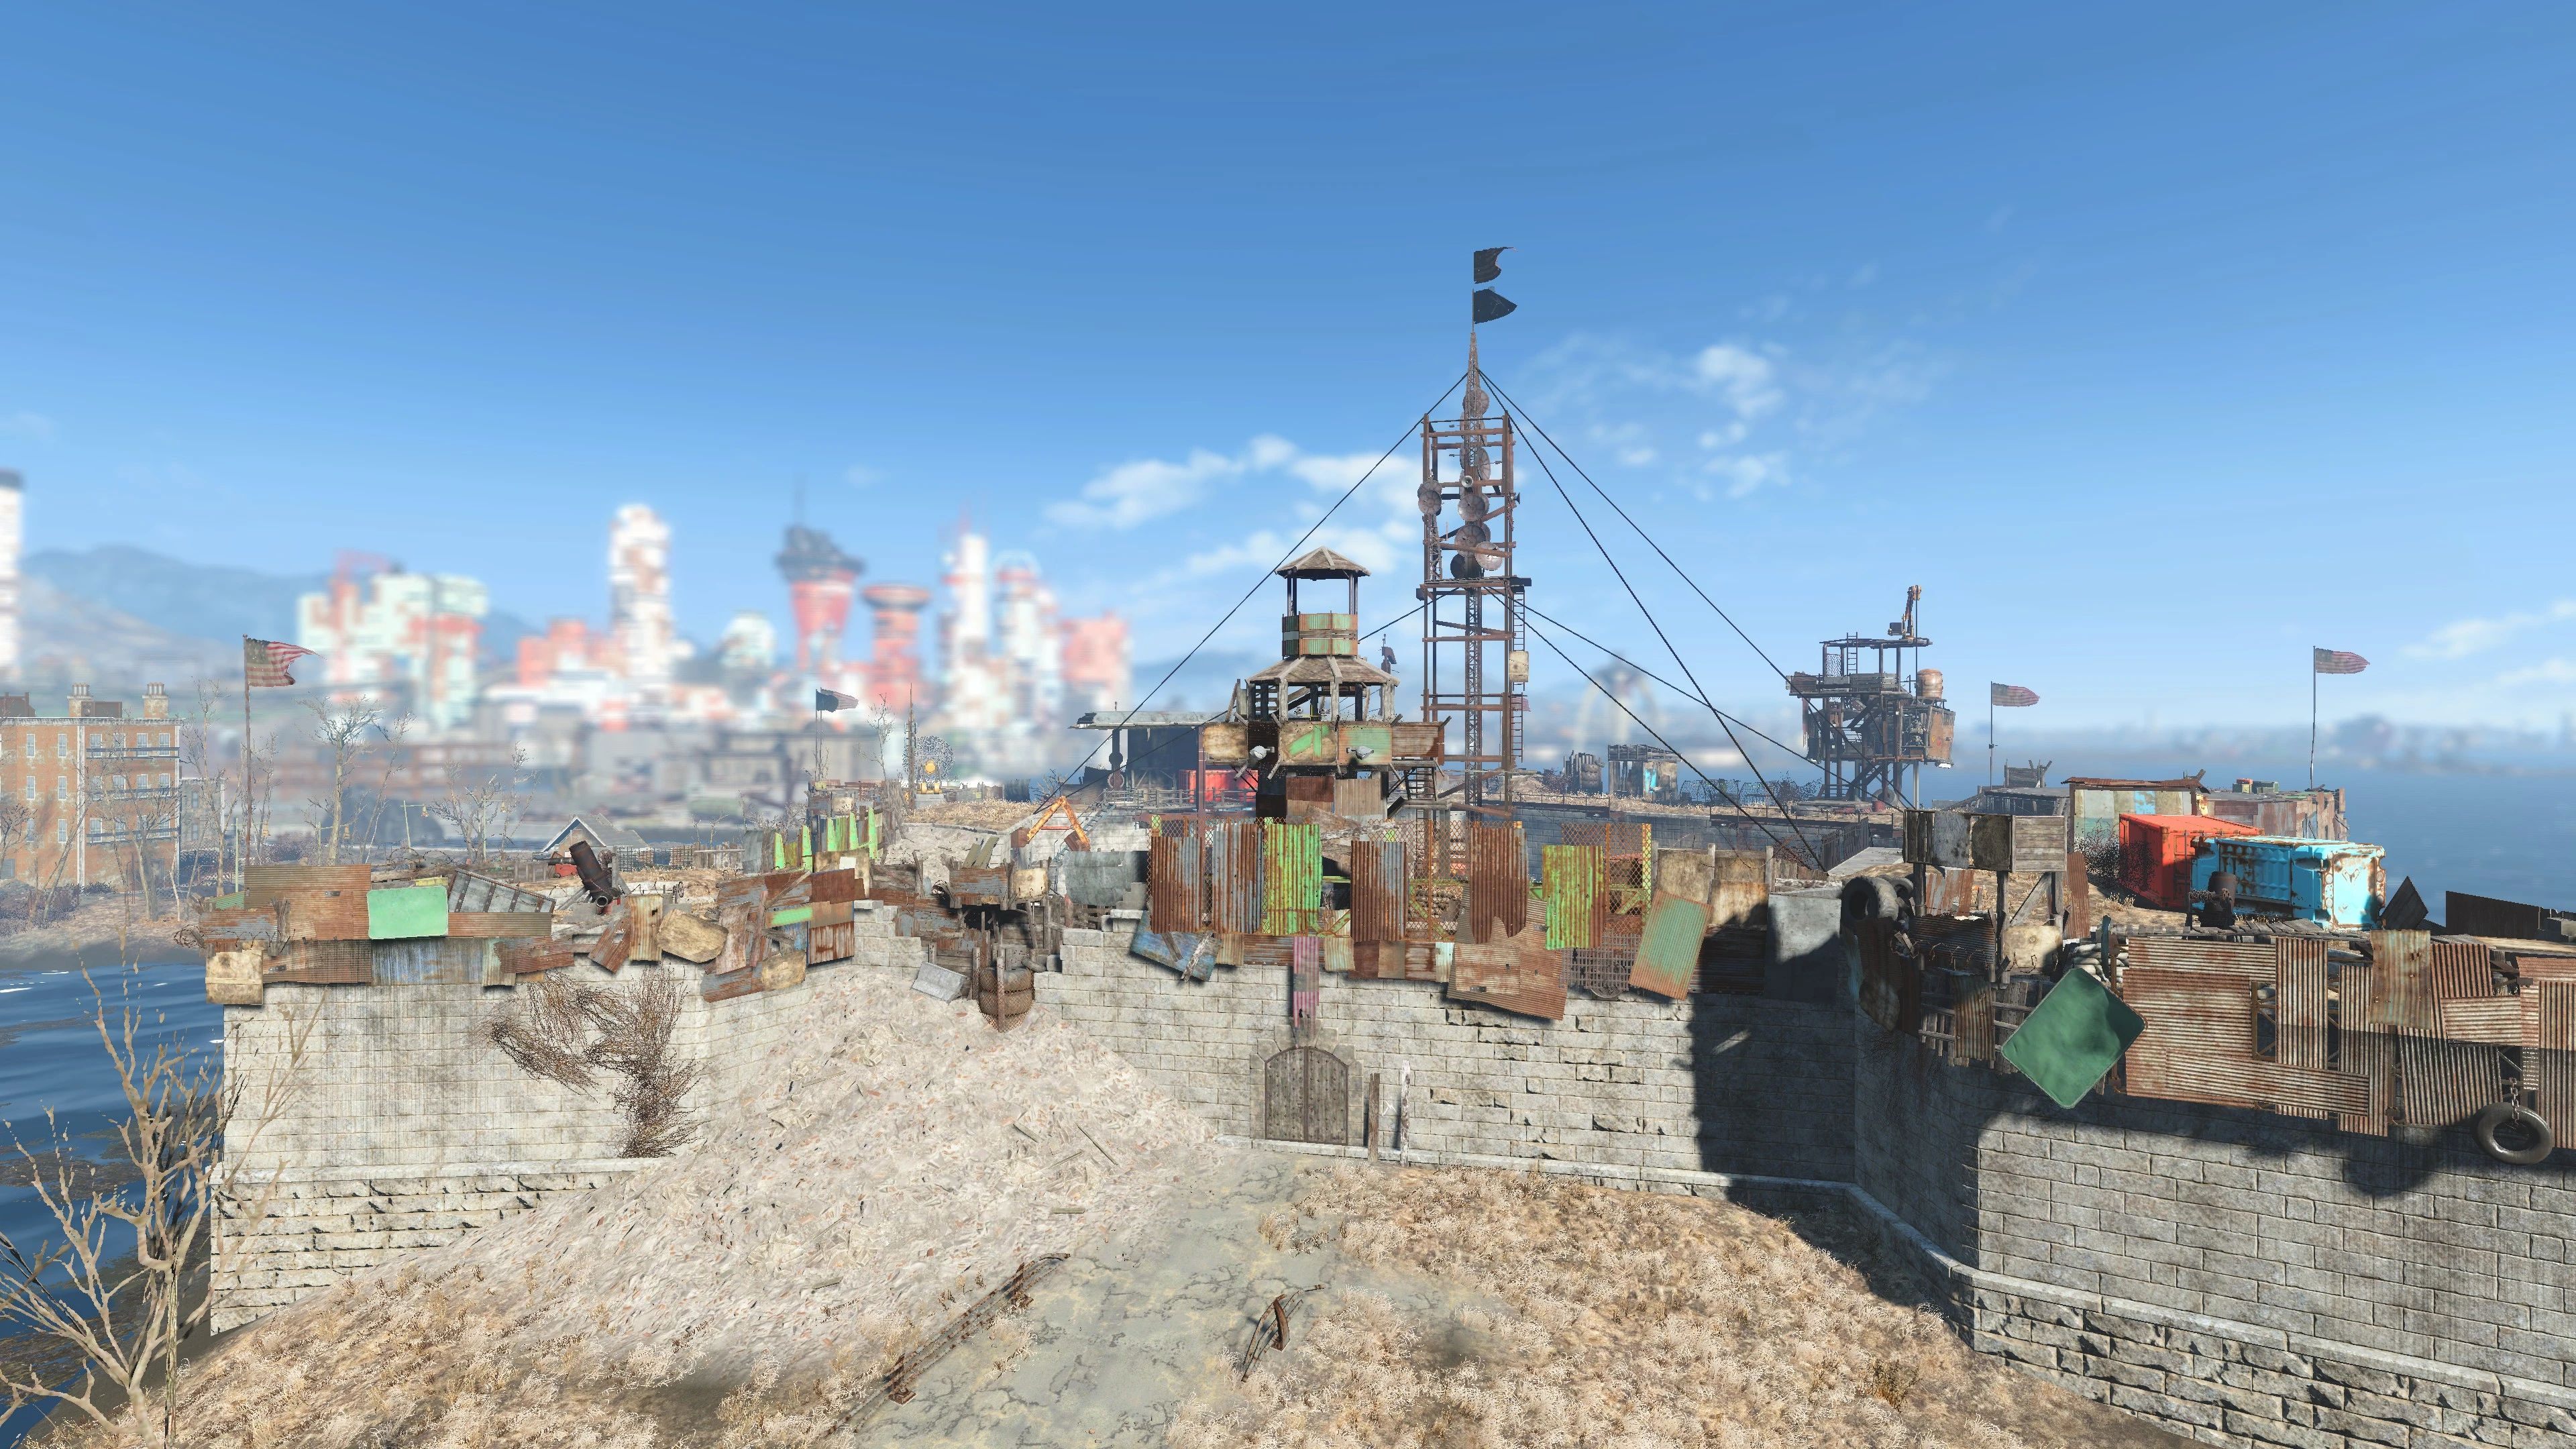 Sim settlements 2 chapter 2. Fallout 4 стол градостроительства SIM Settlements. Фоллаут 4 SIM Settlements 2 Промышленная революция. SIM Settlements 2 отдел безопасности. Fallout 4 поселения с водокачкой.